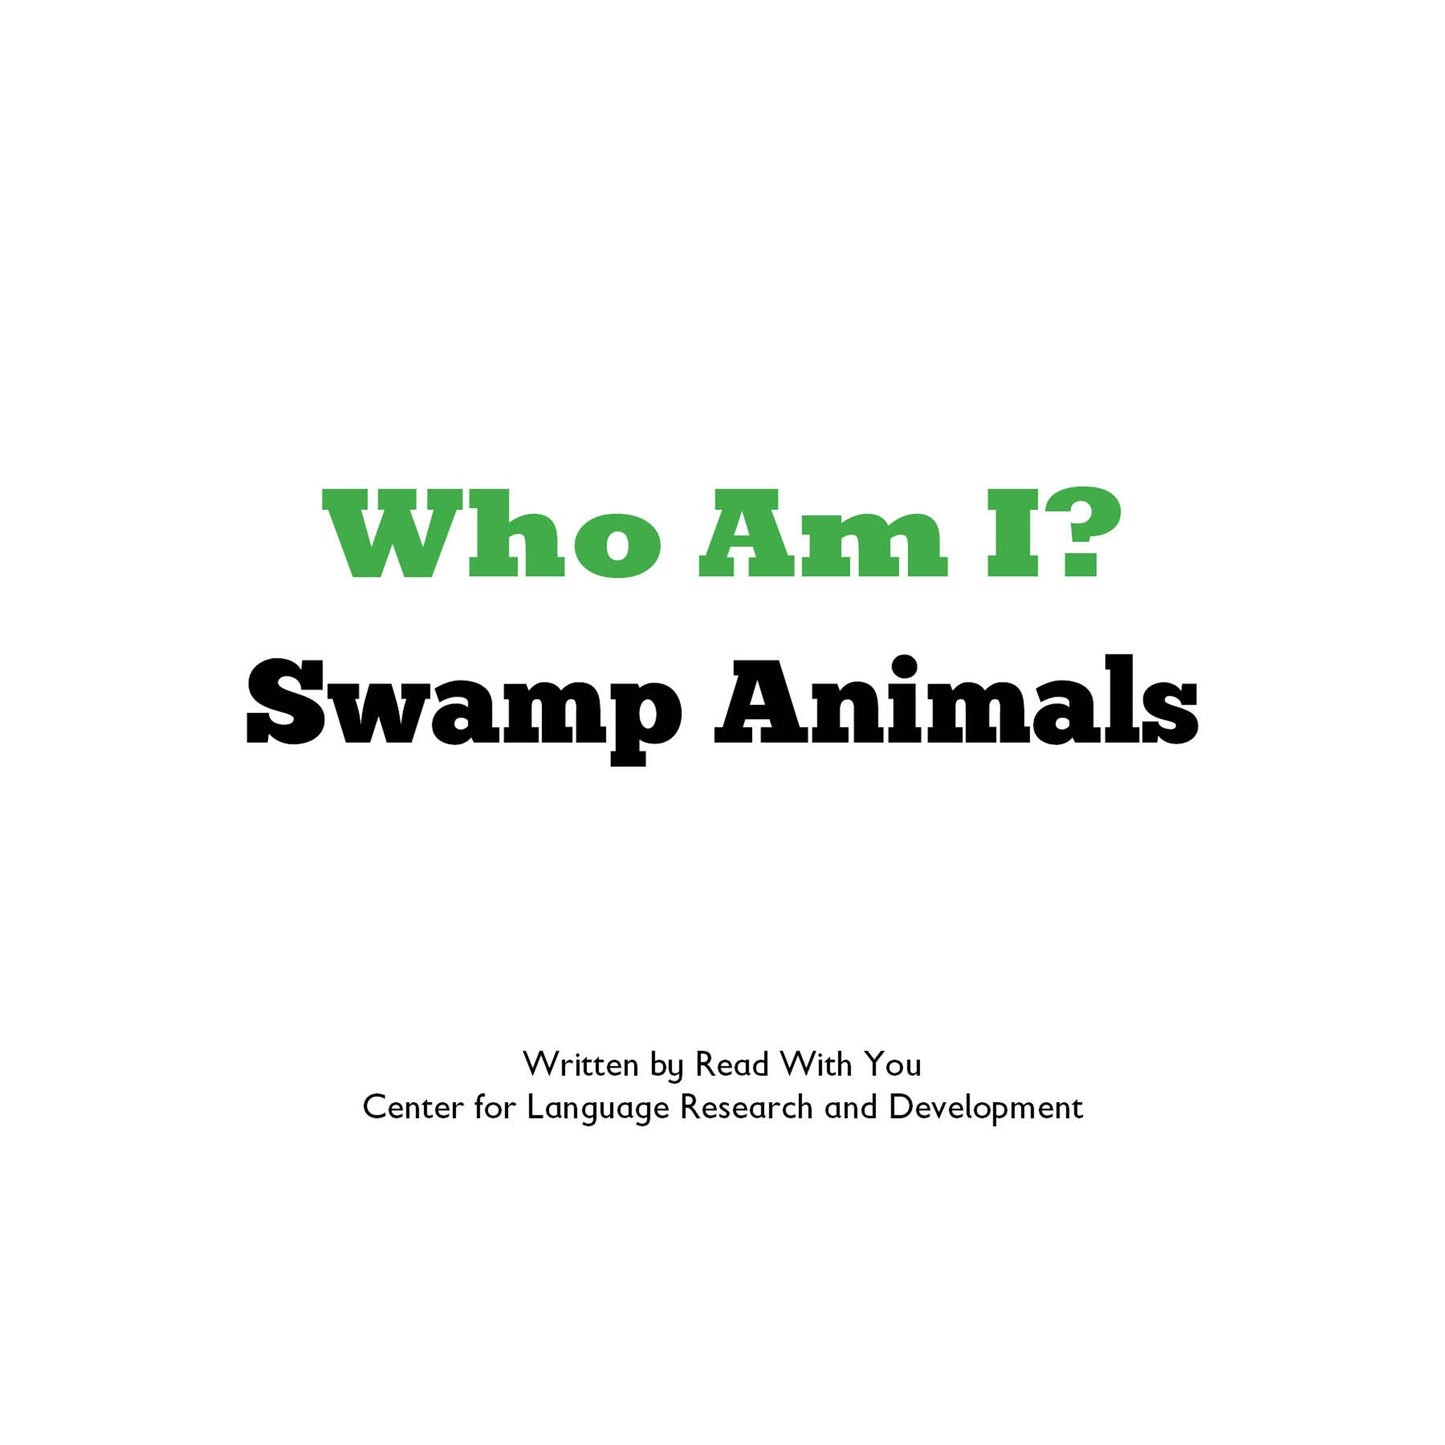 Swamp Animals